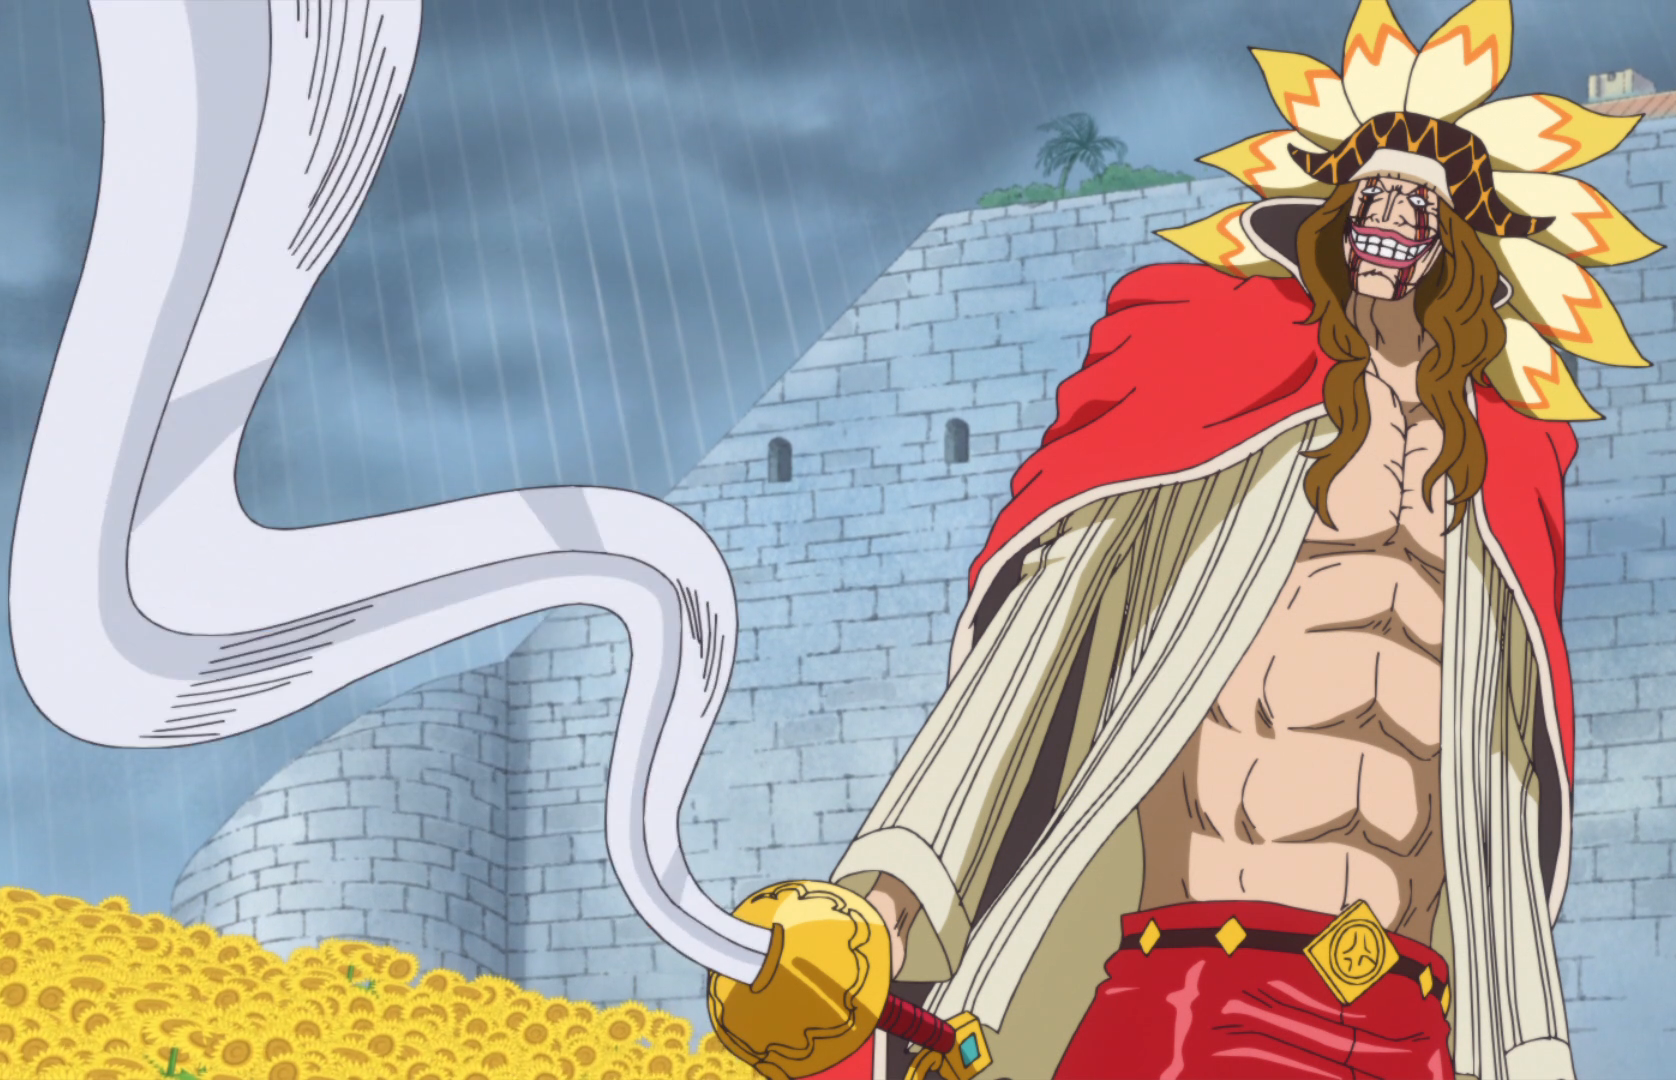 Hira Hira No Mi The One Piece Wiki Manga Anime Pirates Marines Treasure Devil Fruits